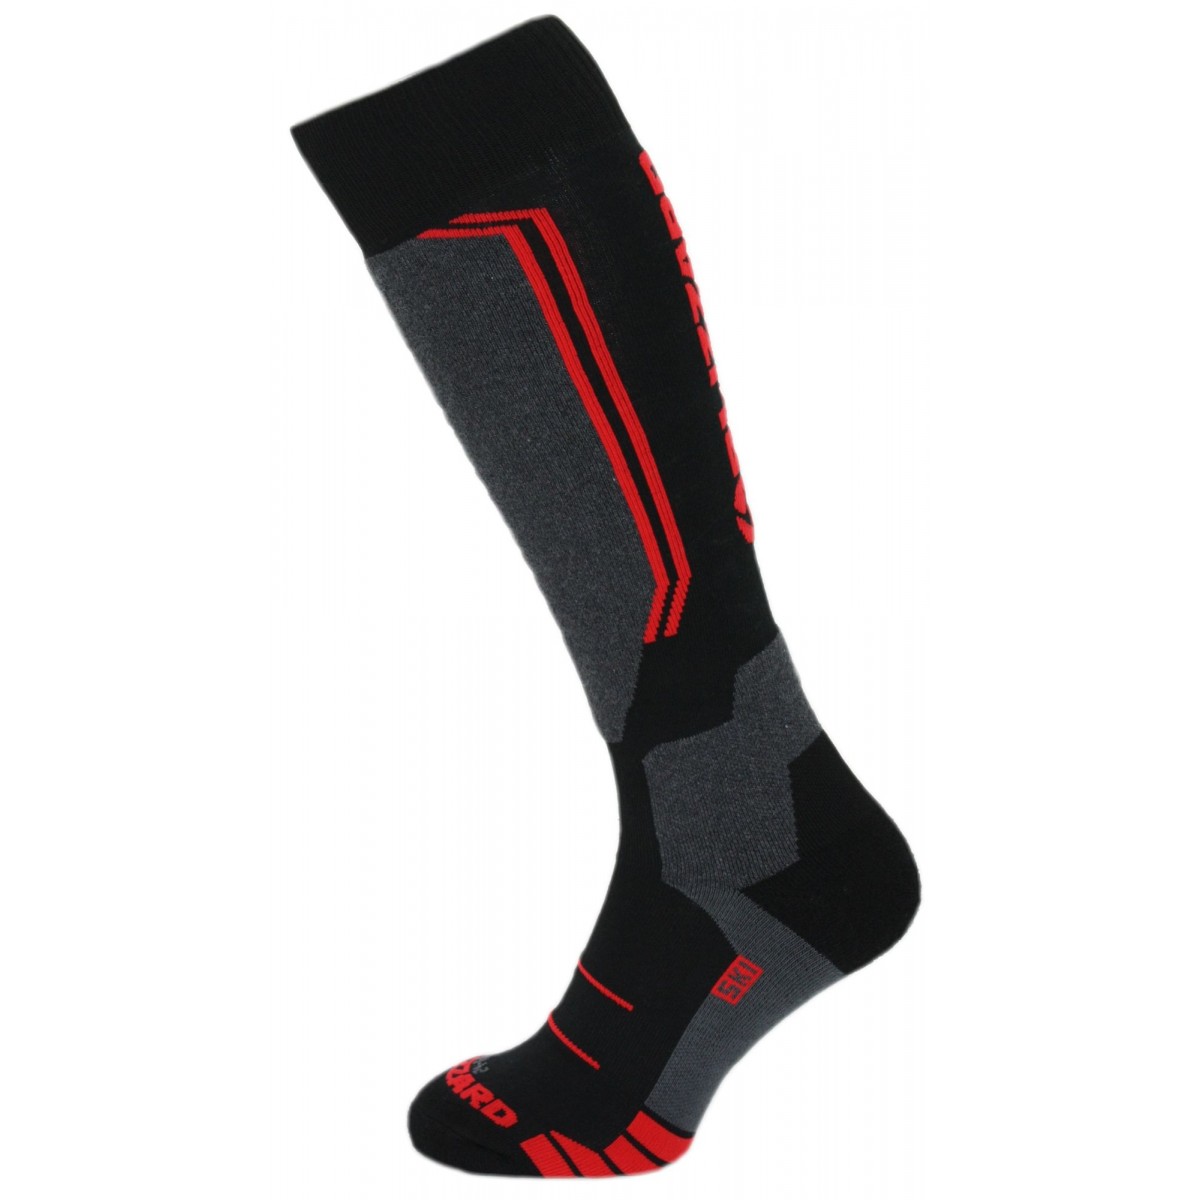 Носки горнолыжные Blizzard Allround Wool Ski Socks Black/Anthracite/Red ботинки горнолыжные atomic 19 20 savor 80 black anthracite